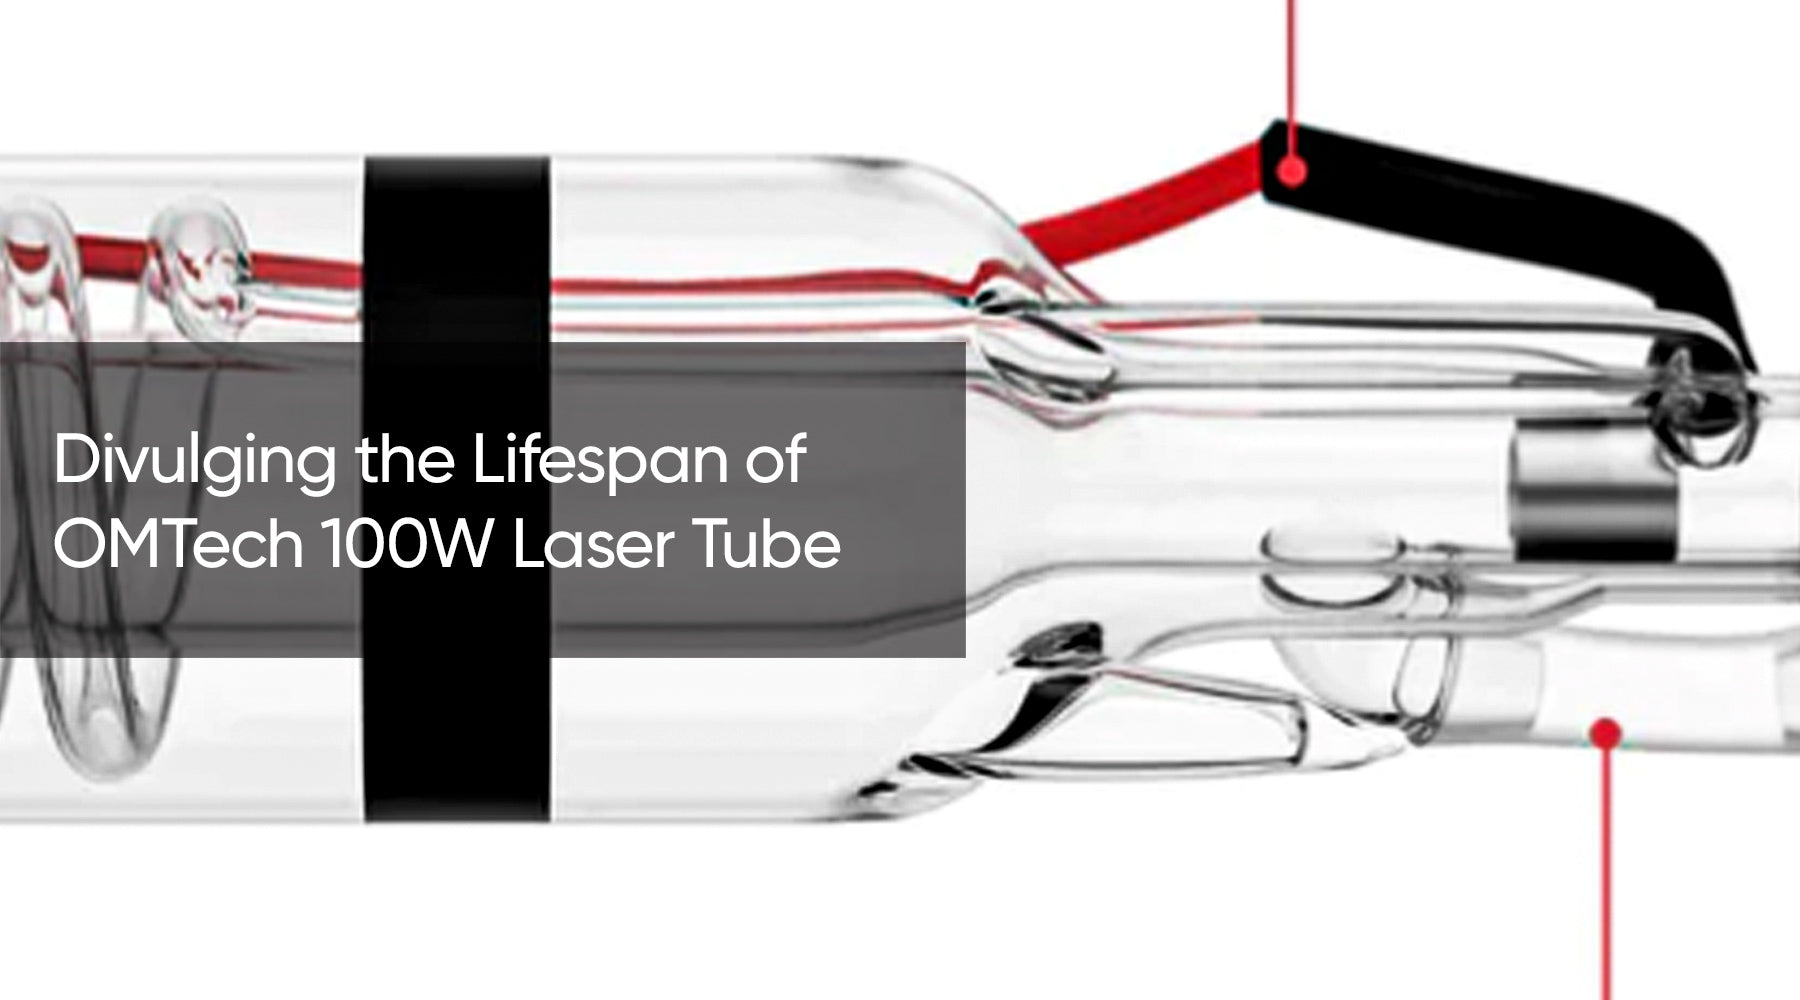 Divulging the Lifespan of OMTech 100W Laser Tube